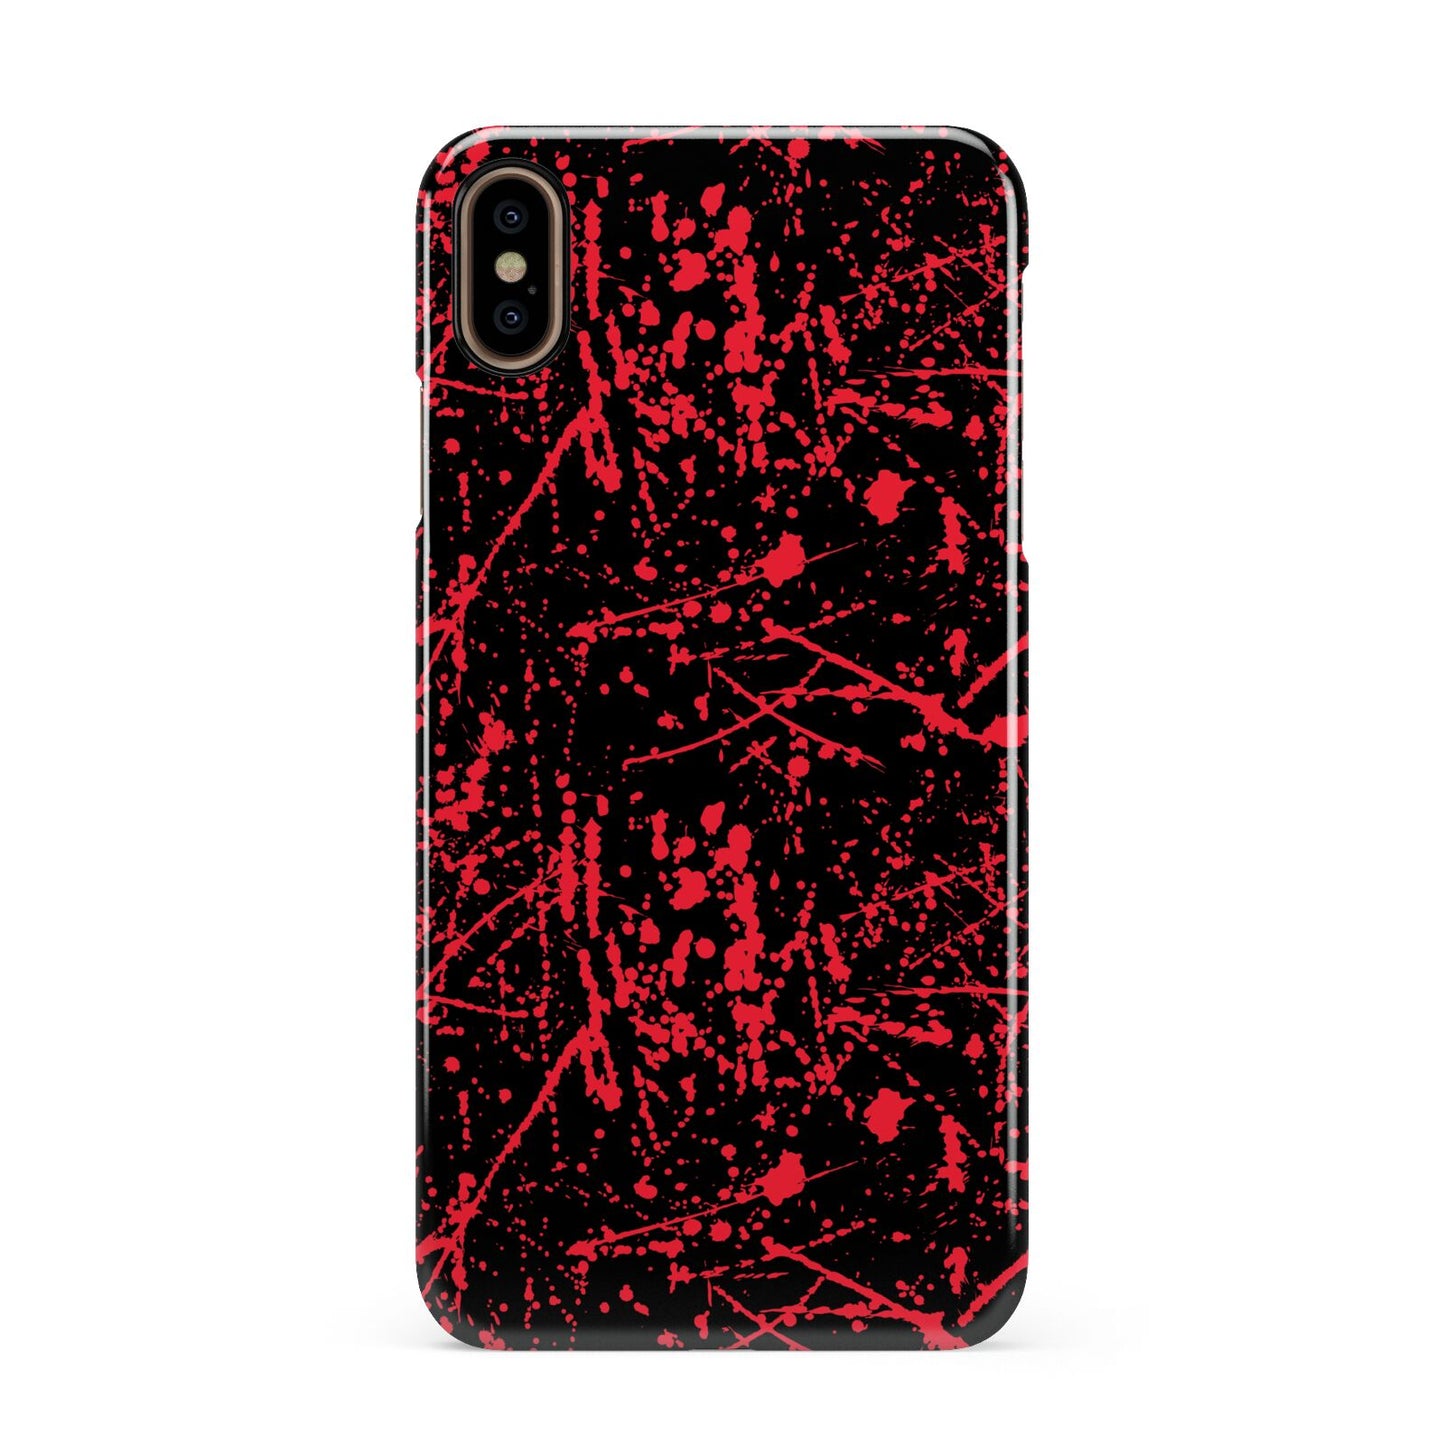 Blood Splatters Apple iPhone Xs Max 3D Snap Case